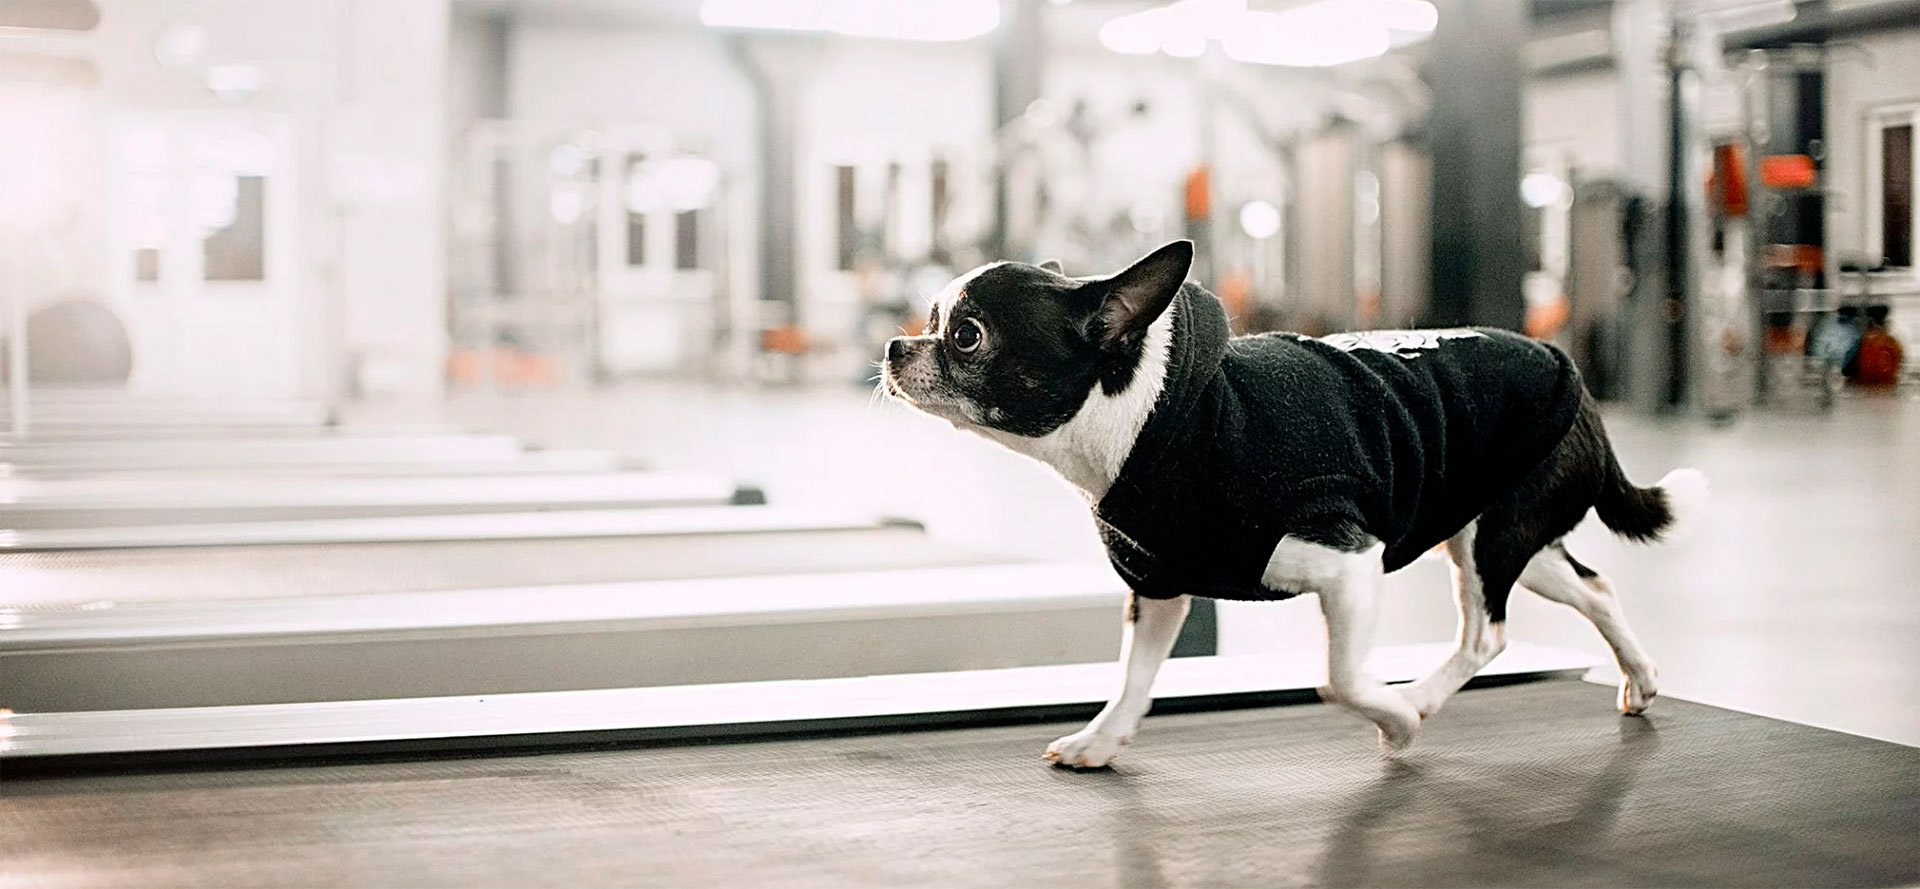 Small breed dog on a treadmill.